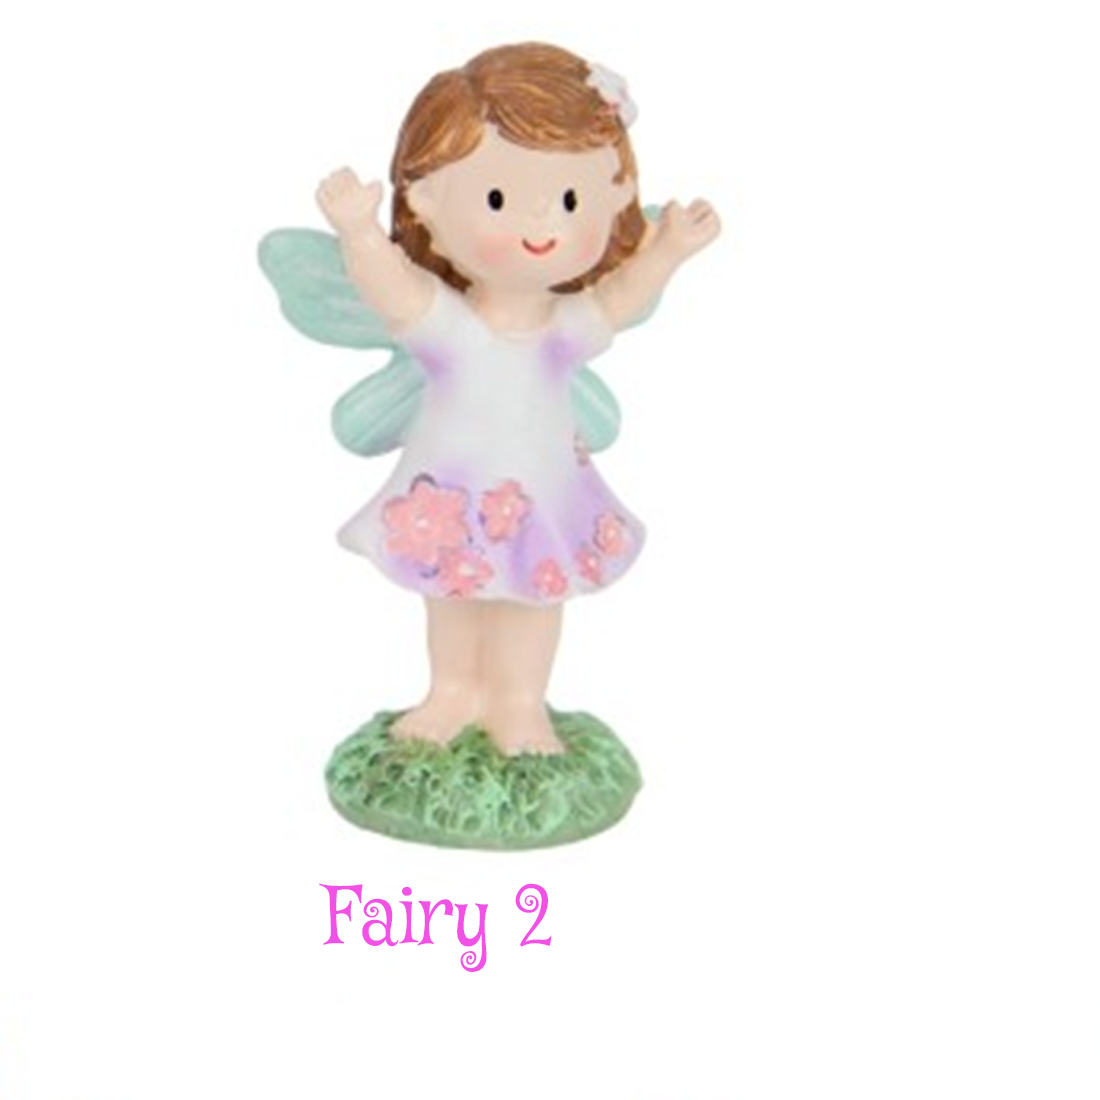 My Fairy Figurine